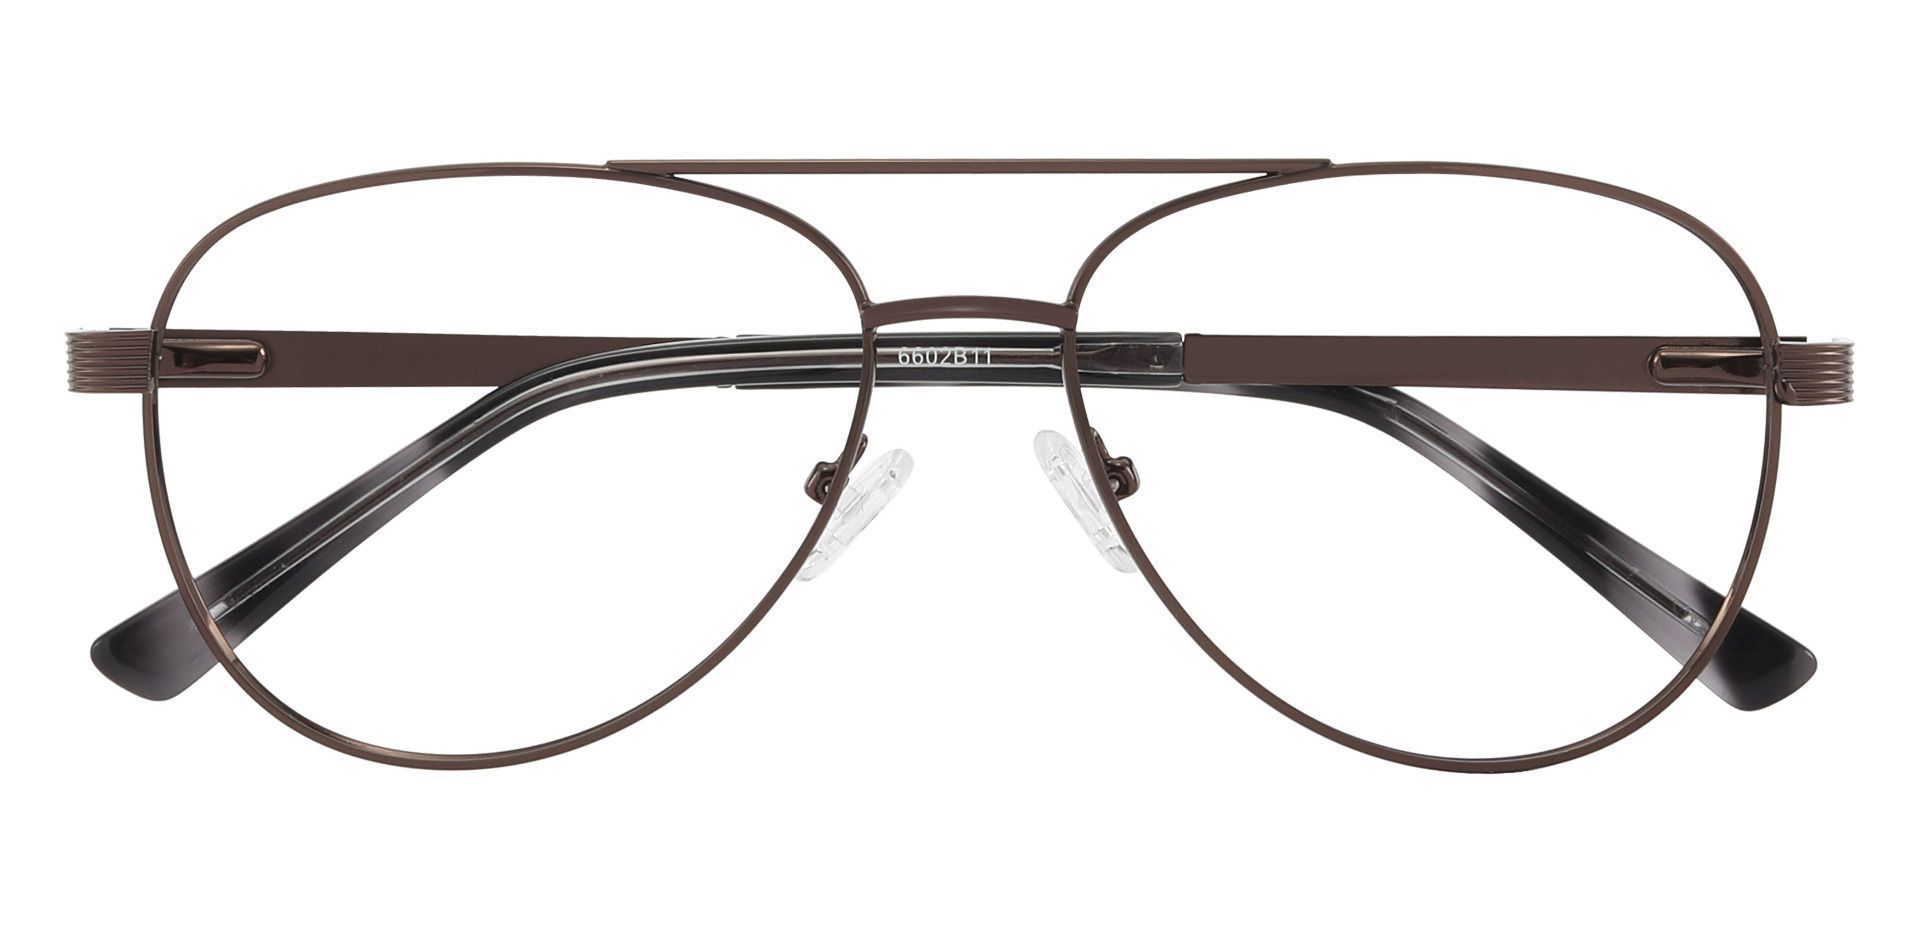 Oxford Aviator Lined Bifocal Glasses - Brown